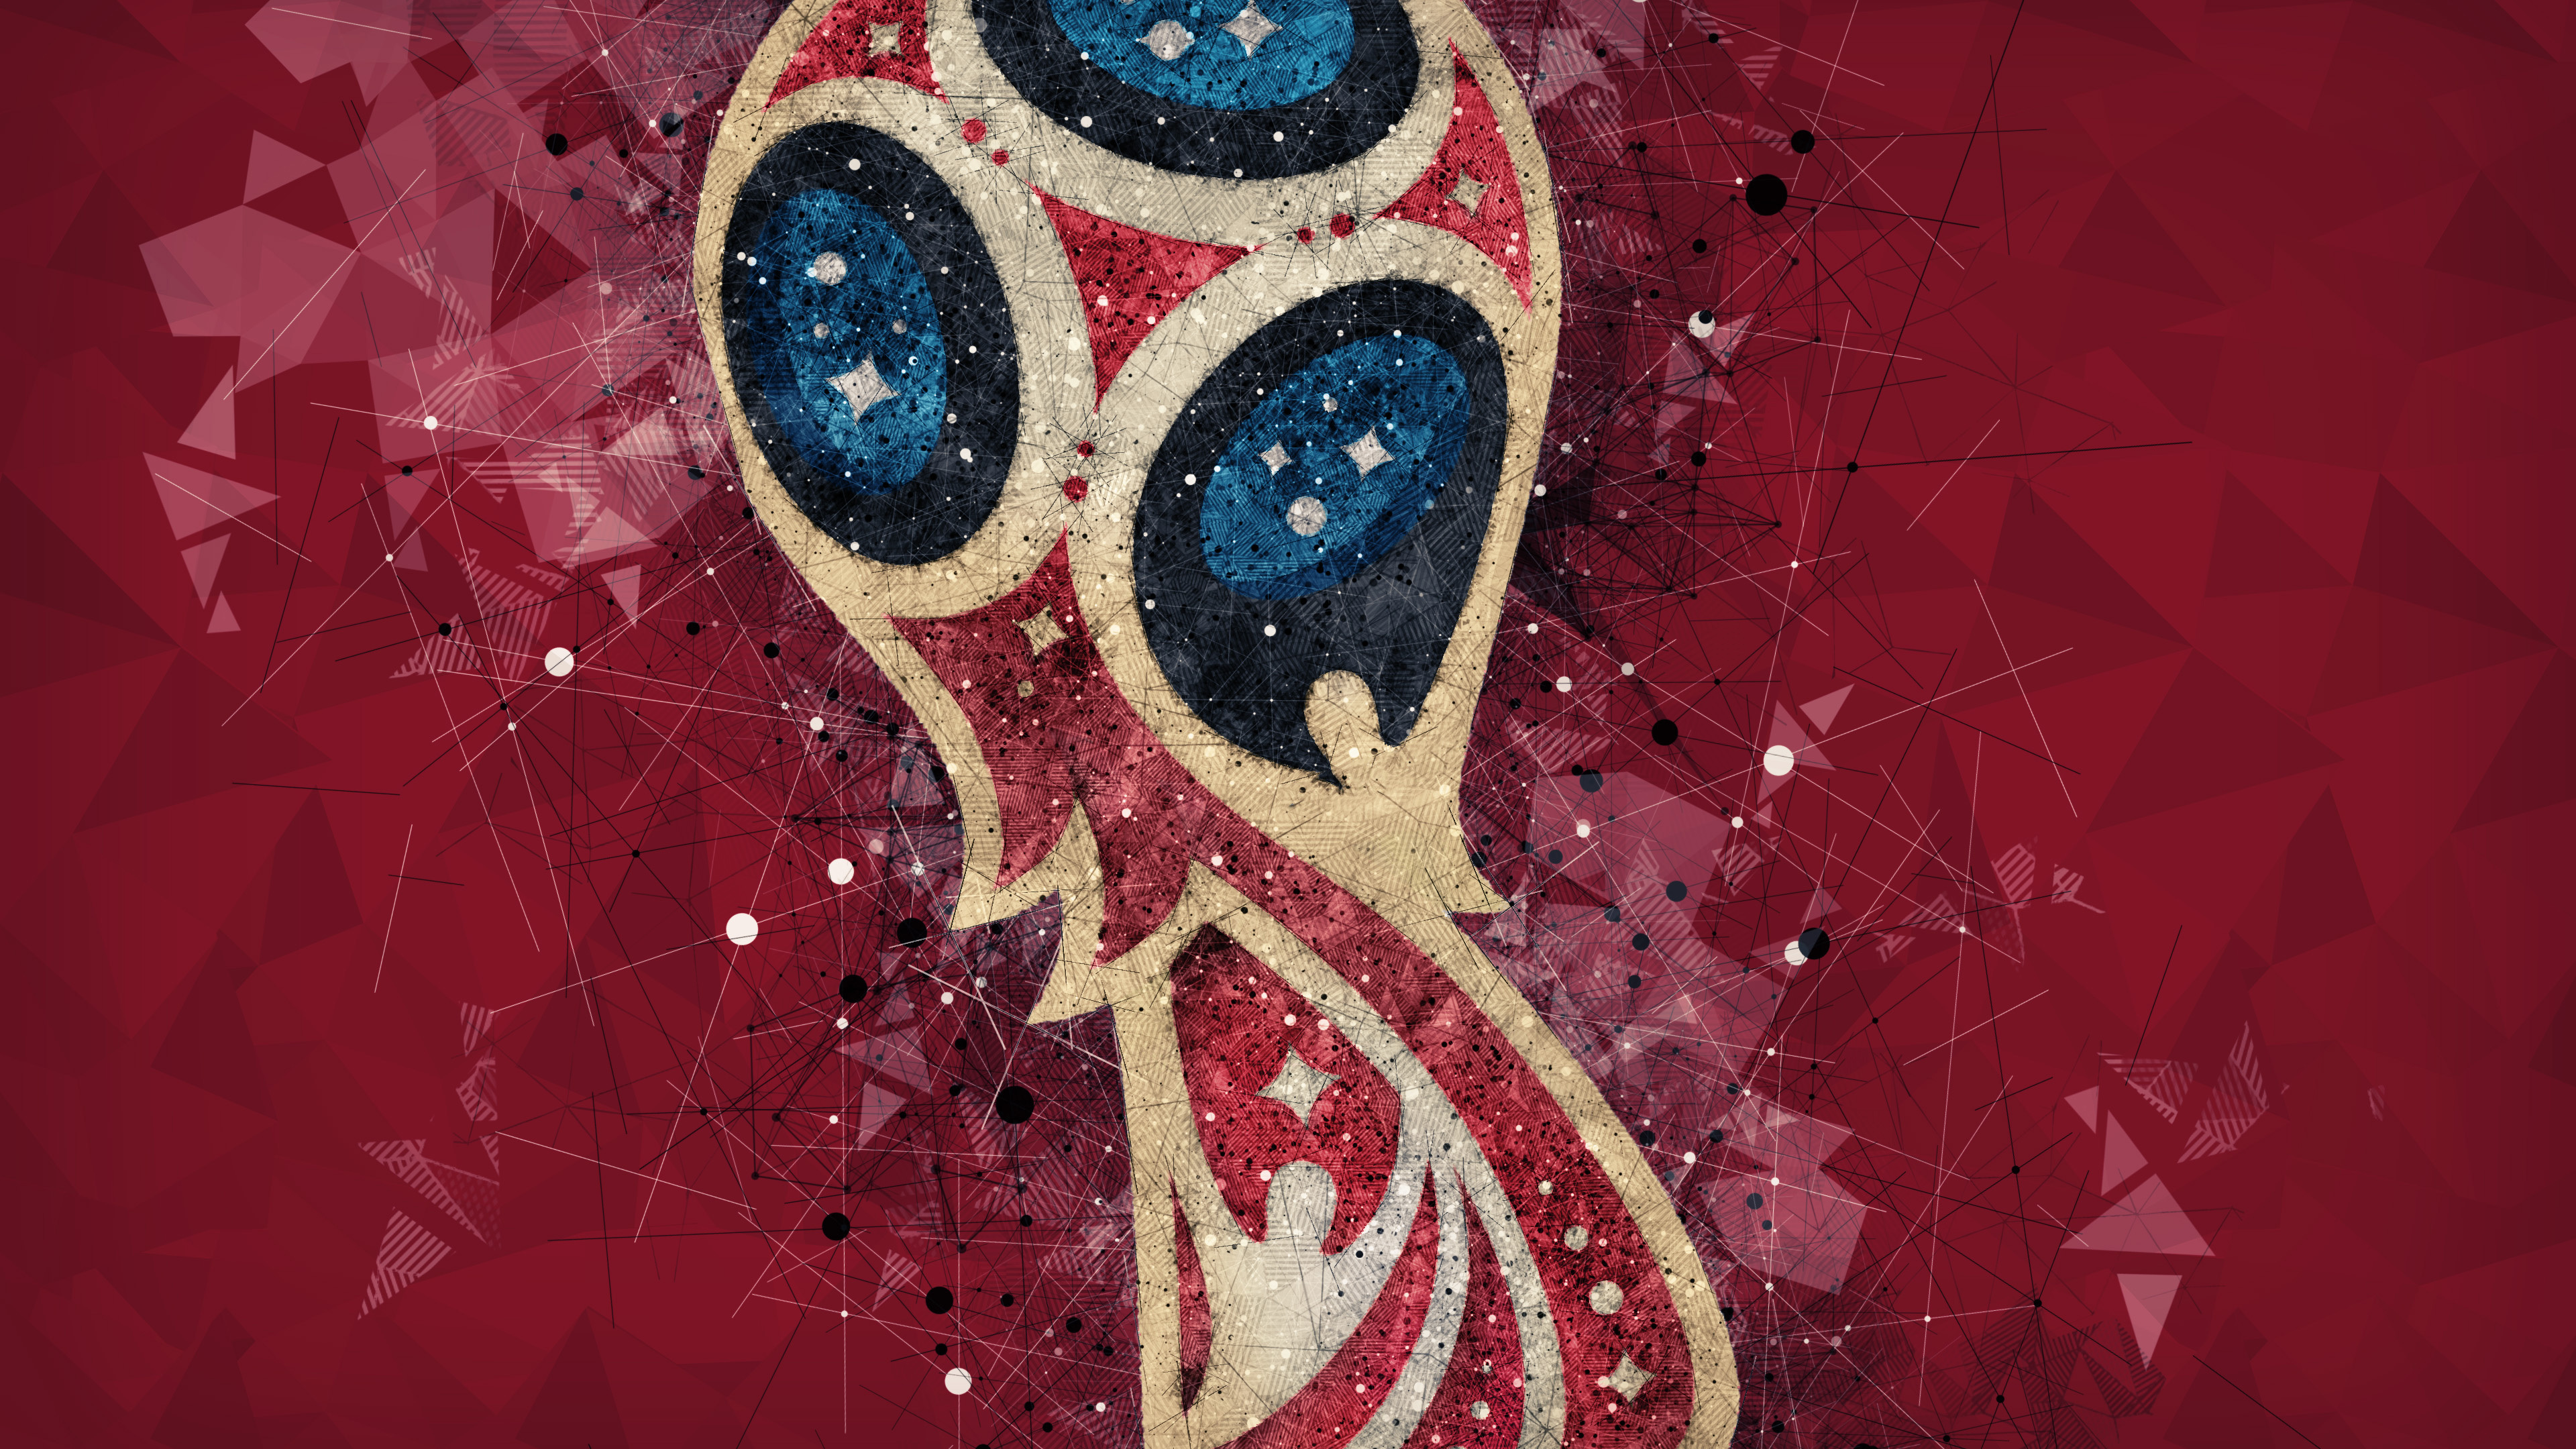 fifa world cup russia logo 1538786896 - FIFA World Cup Russia Logo - logo wallpapers, hd-wallpapers, games wallpapers, football wallpapers, fifa world cup russia wallpapers, fifa wallpapers, 4k-wallpapers, 2018 games wallpapers